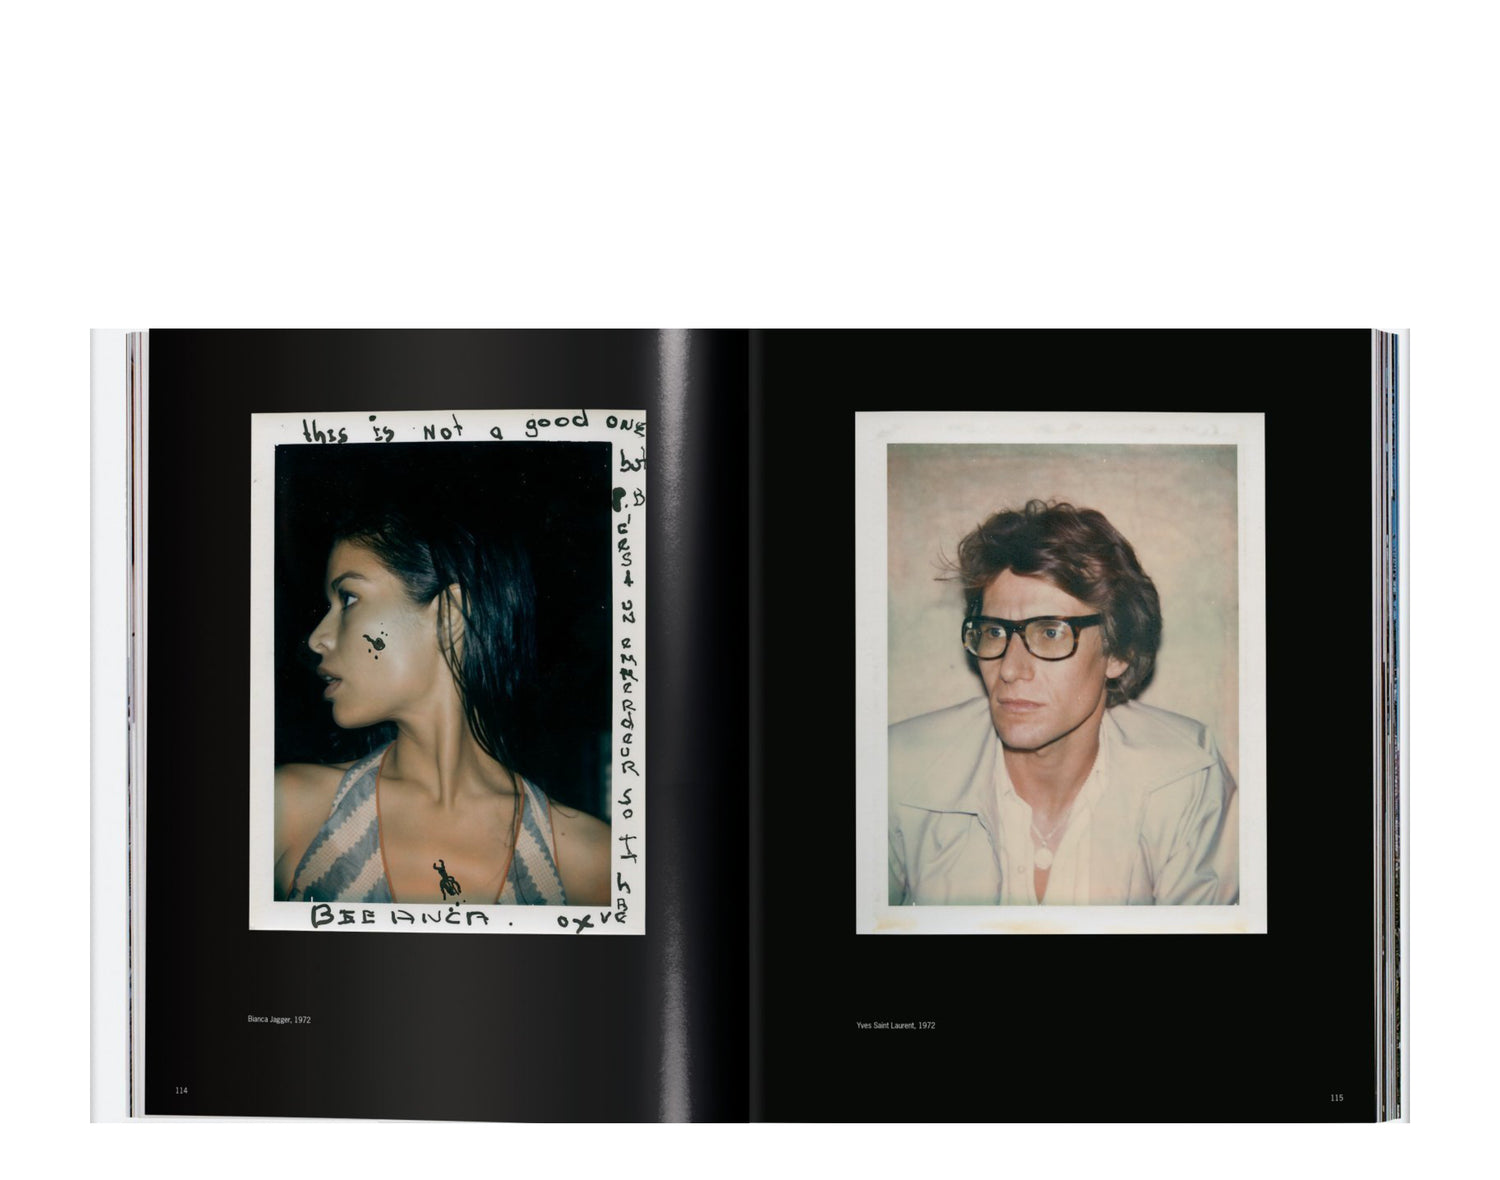 Taschen Books - Andy Warhol - Polaroids Hardcover Book